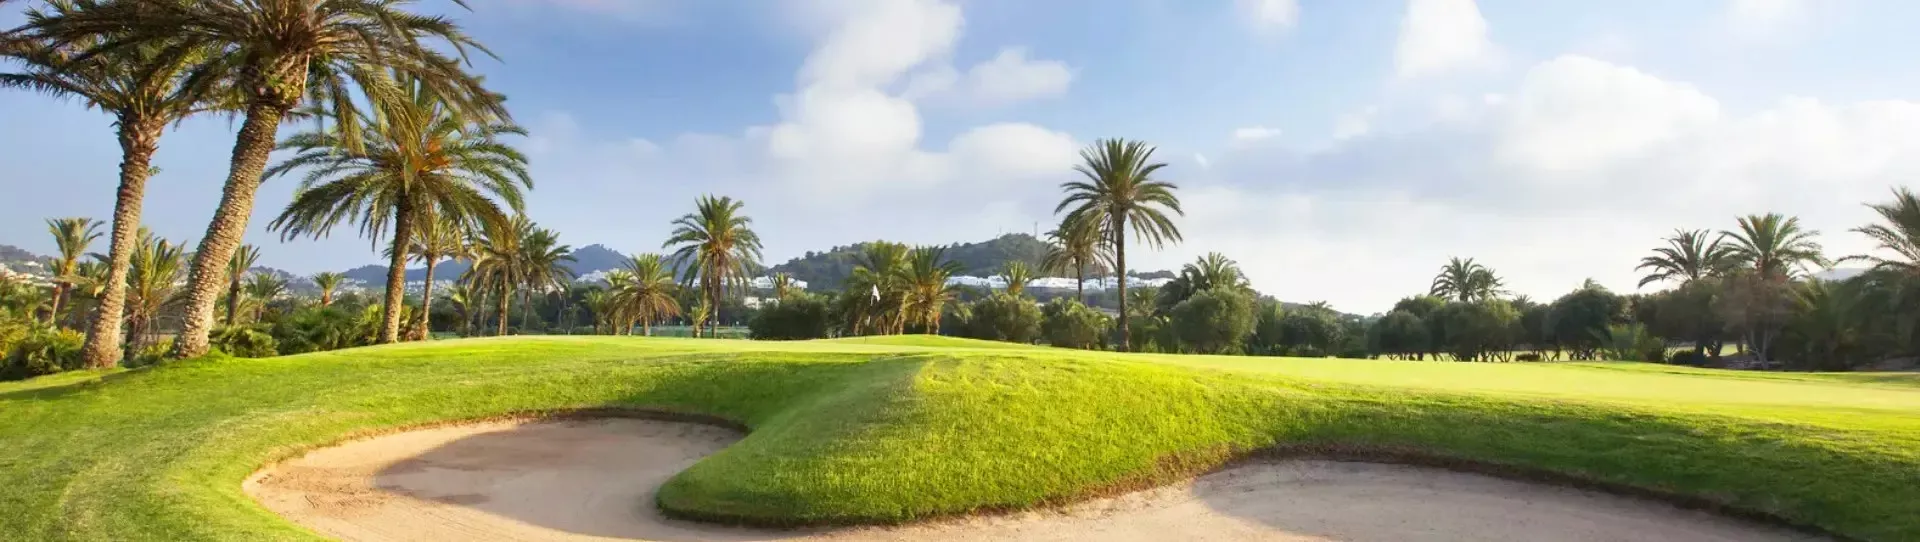 Spain golf courses - La Manga Club Resort North - Photo 2